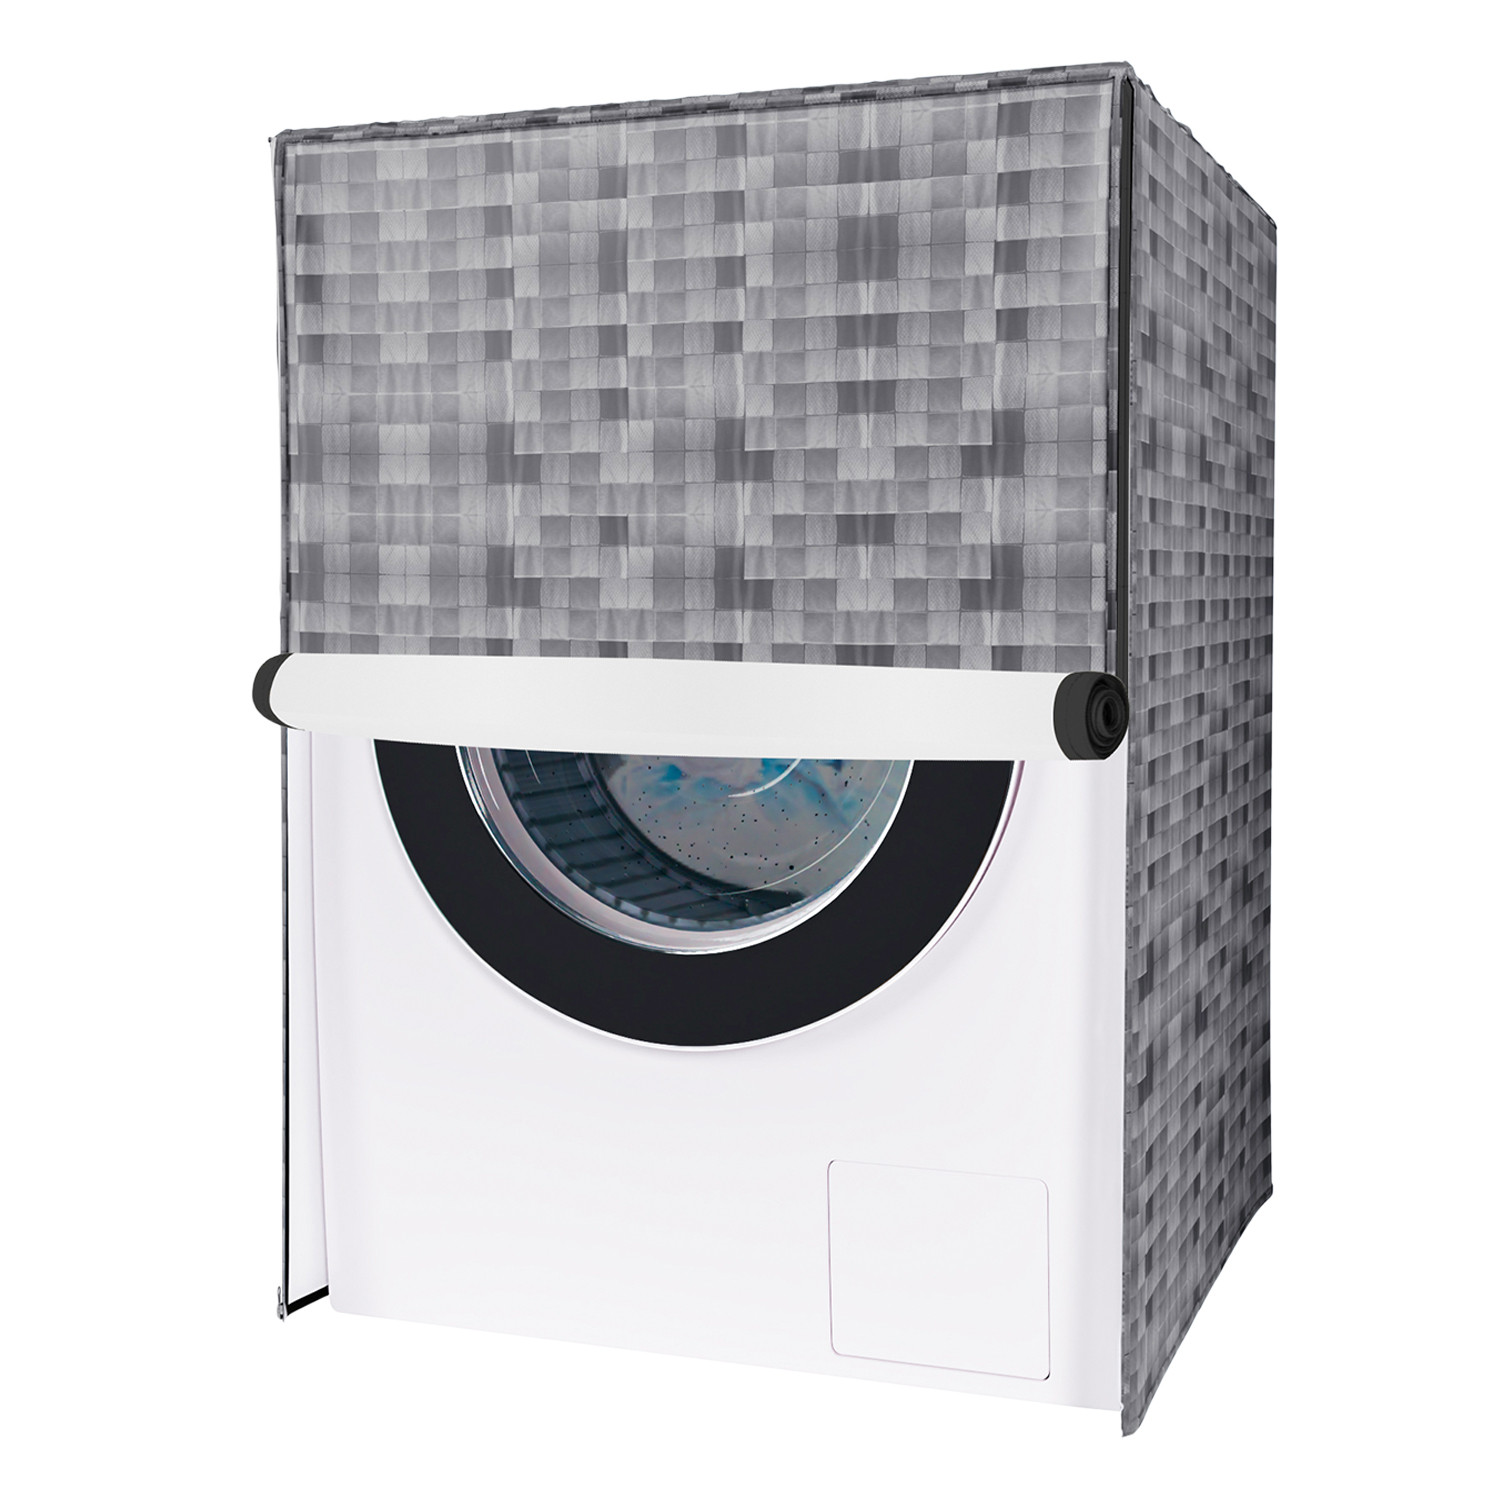 Kuber Industries Washing Machine Cover | Shelf Check Washing Machine Cover | Soft PVC | Front Load Washing Machine Cover | Gray